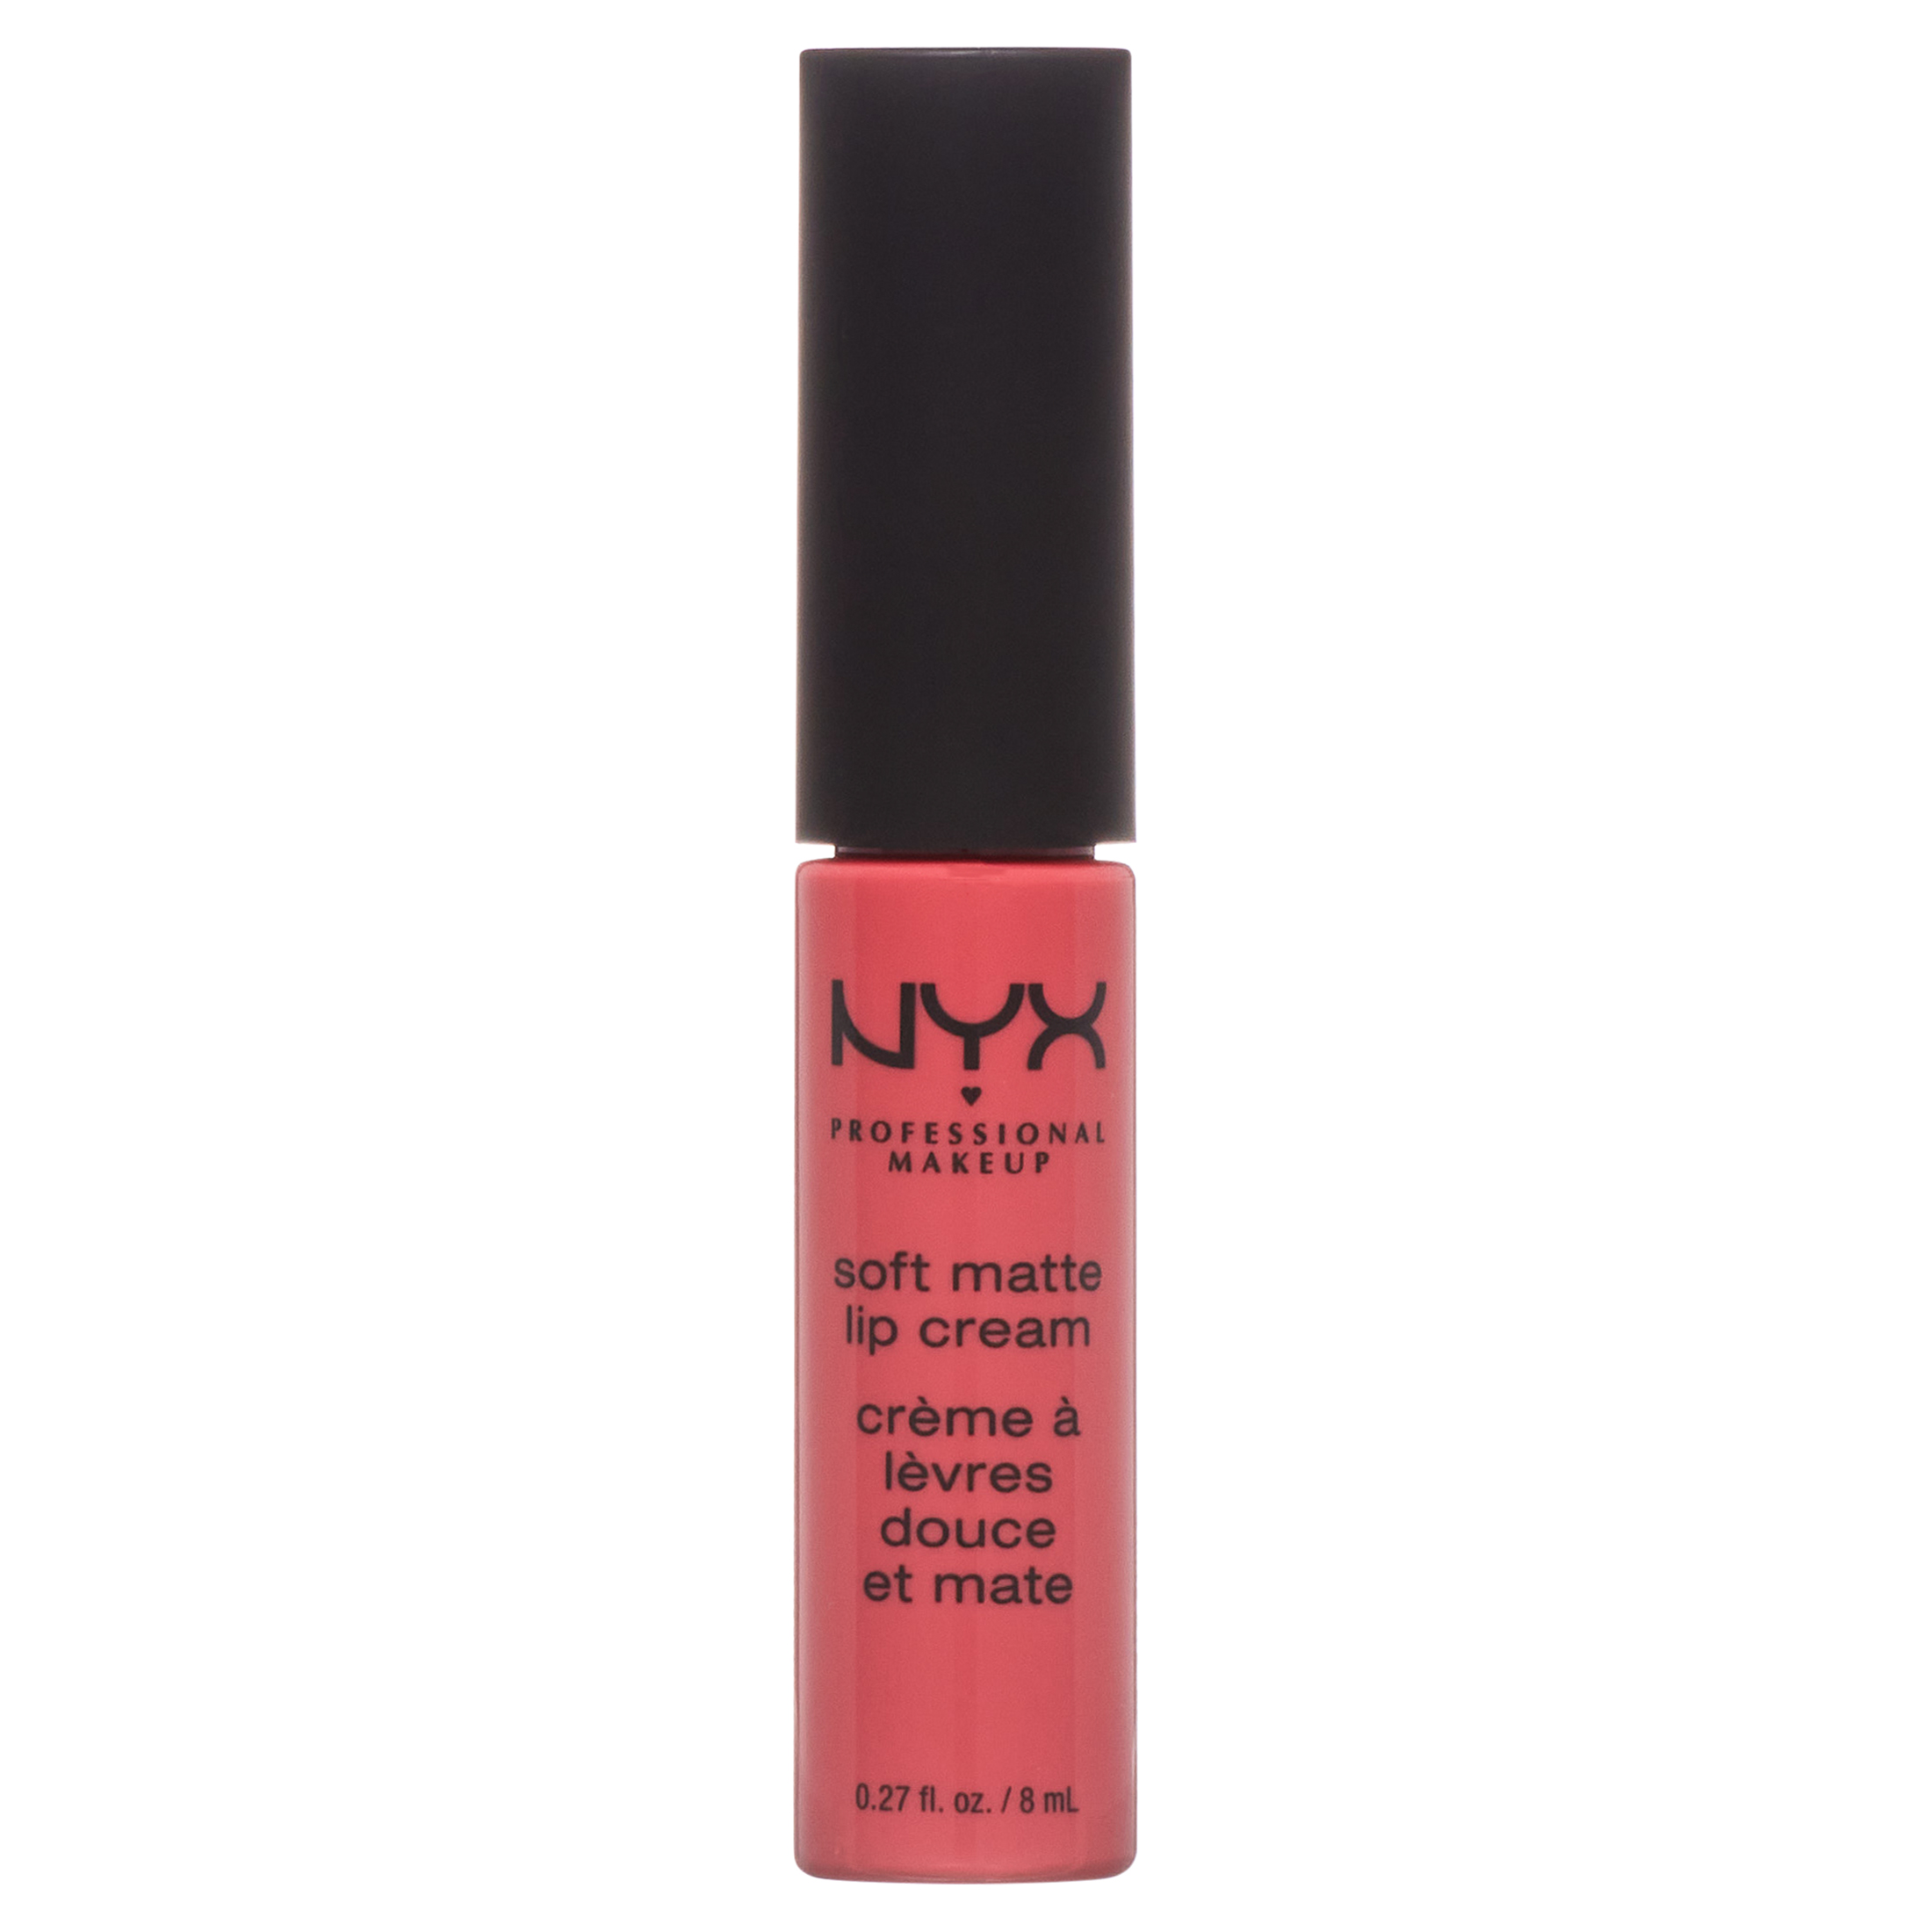 NYX Professional Makeup Soft Matte Lip Cream, Lightweight Liquid Lipstick Sao Paulo - image 4 of 8